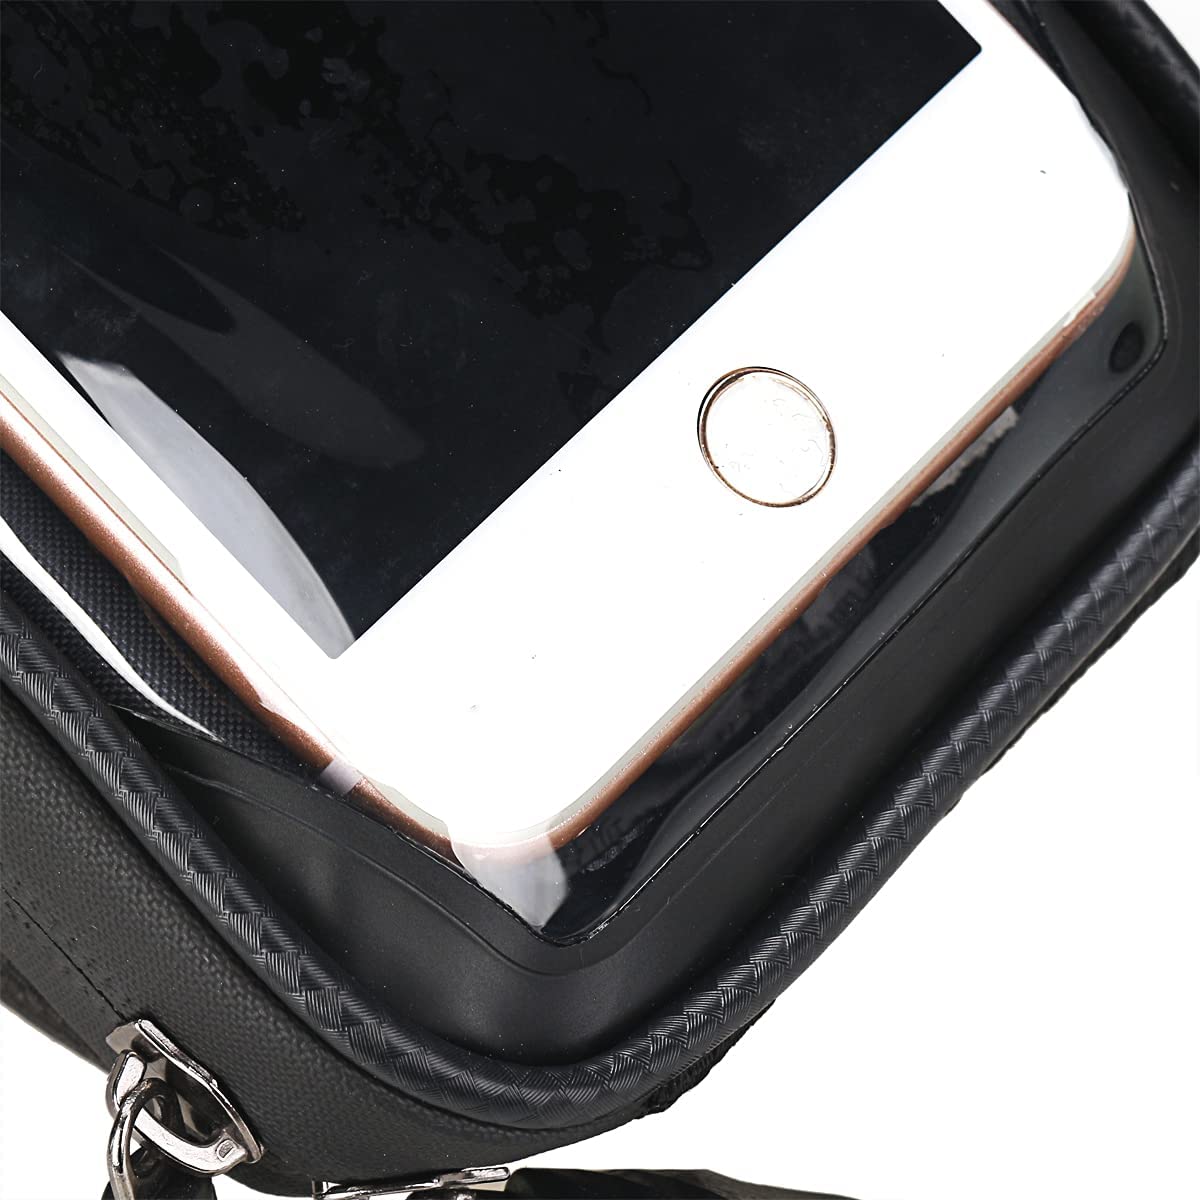 Bezior Ya395 Bicycle Hard Shell Waterproof Portable Cell Phone Storage Bag 6